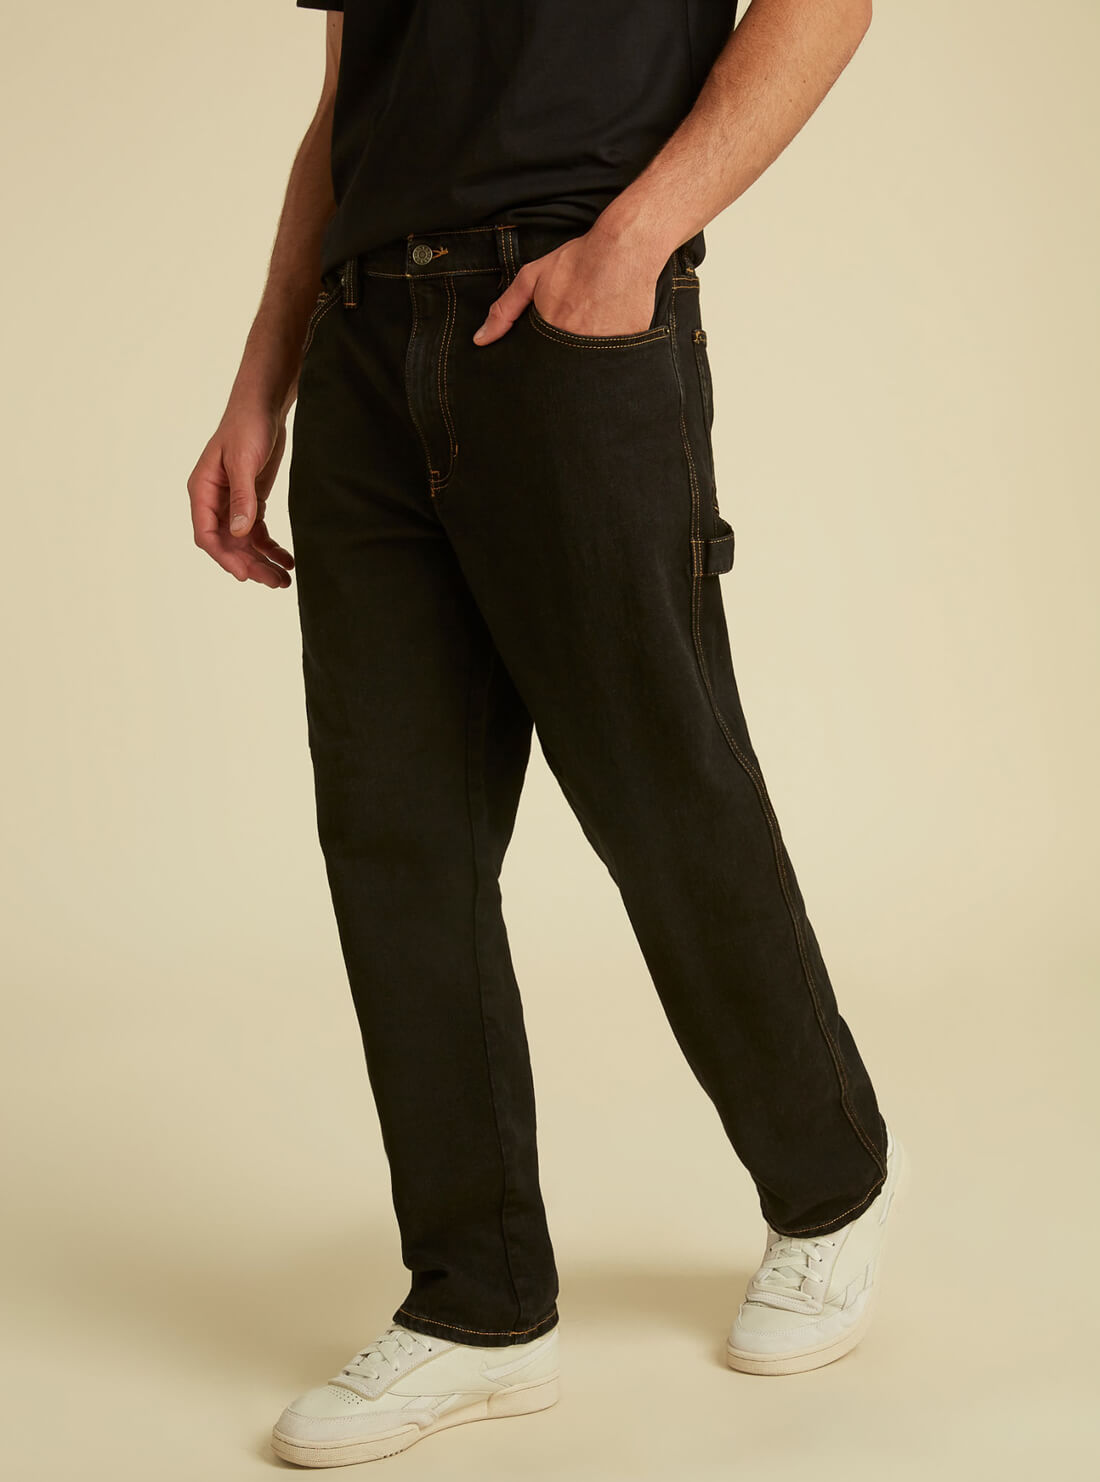 GUESS Mens GUESS Originals Straight Fit Carpenter Denim Jeans in Vintage Black Wash M1GA06R4AS0 Detail View